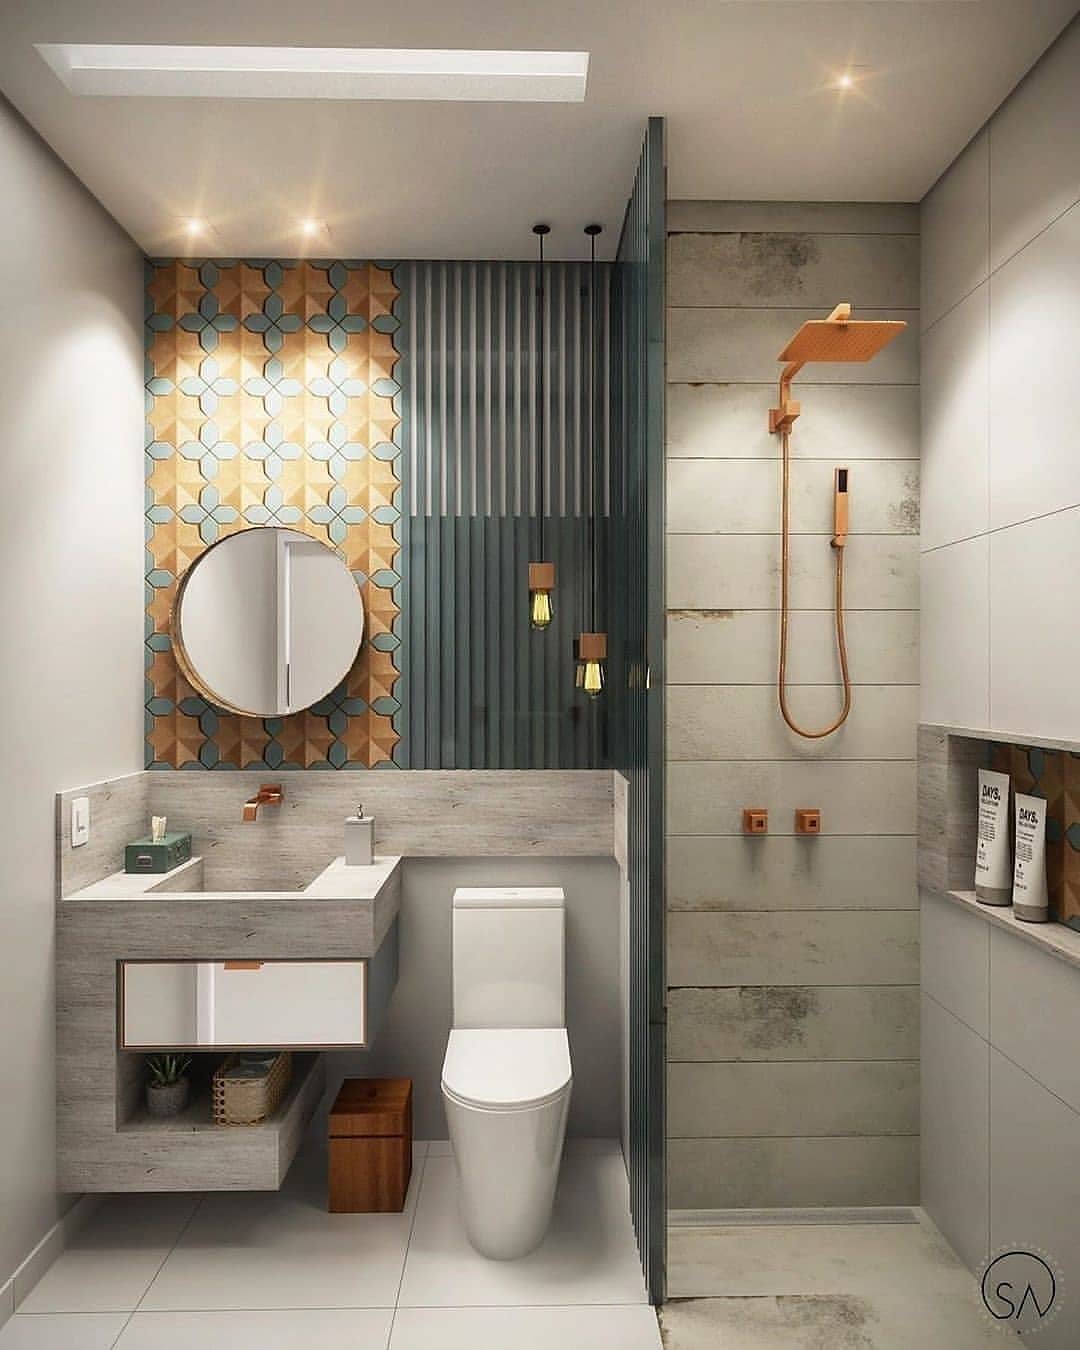 Desain Interior Kamar Mandi Minimalis Dengan Keramik Warna Untuk Menimbulkan Kesan Artistik Inspirasi Desain Rumah Terkini